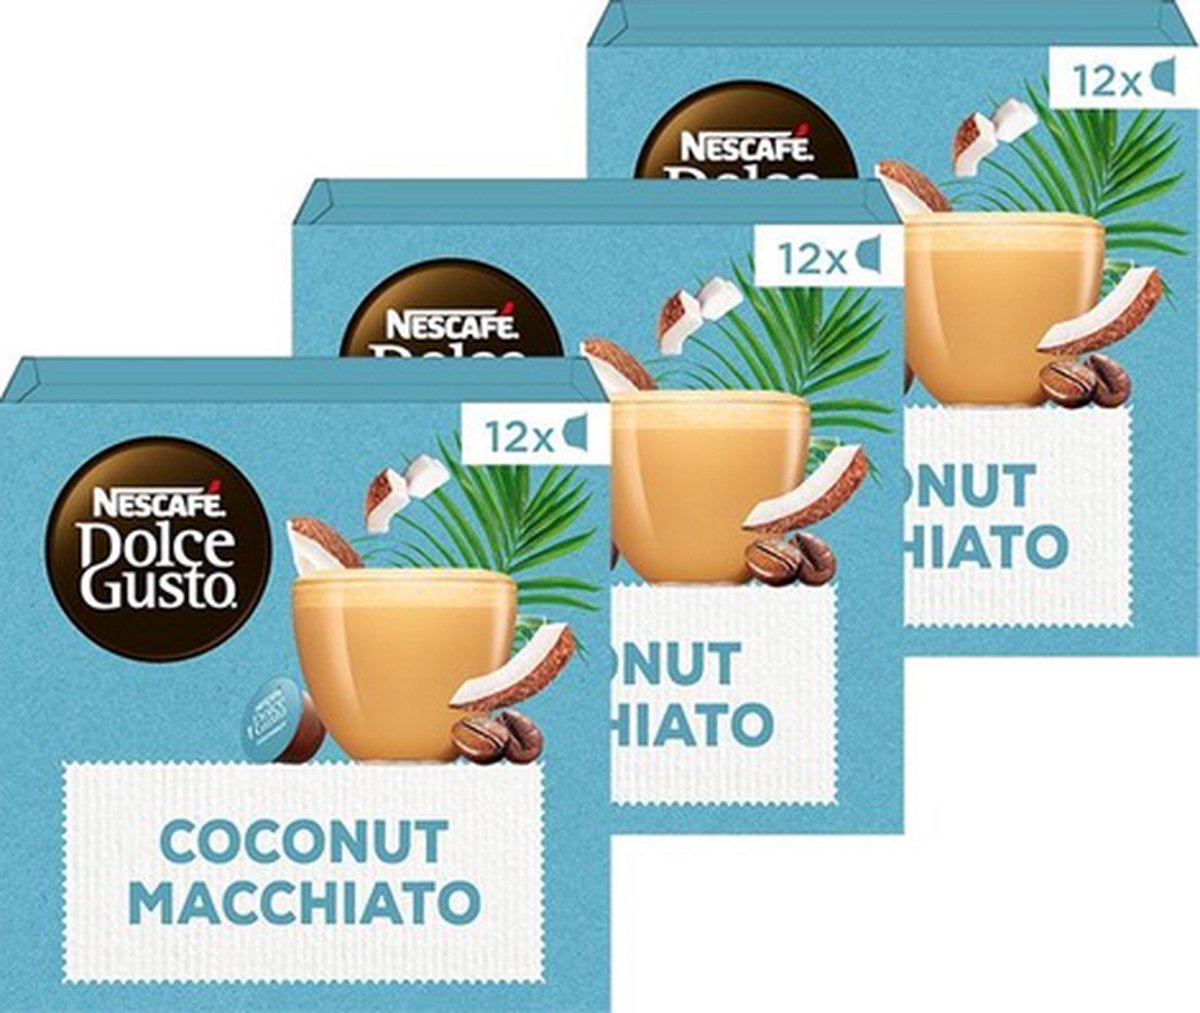 Nescafé Big Pack Latte Macchiato - 30 Capsules pour Dolce Gusto à 7,69 €